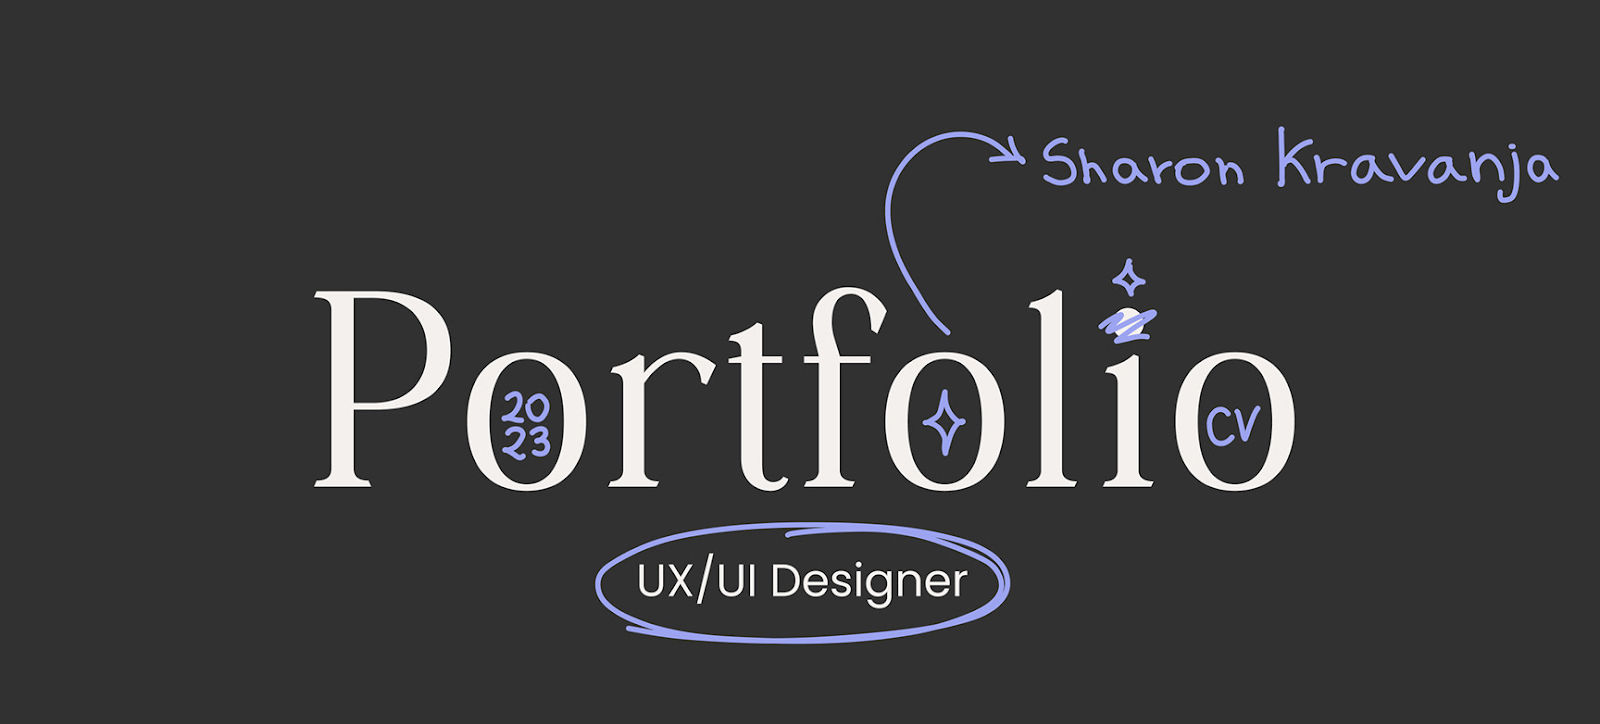 Sharon Karvanja’s UI portfolio home page